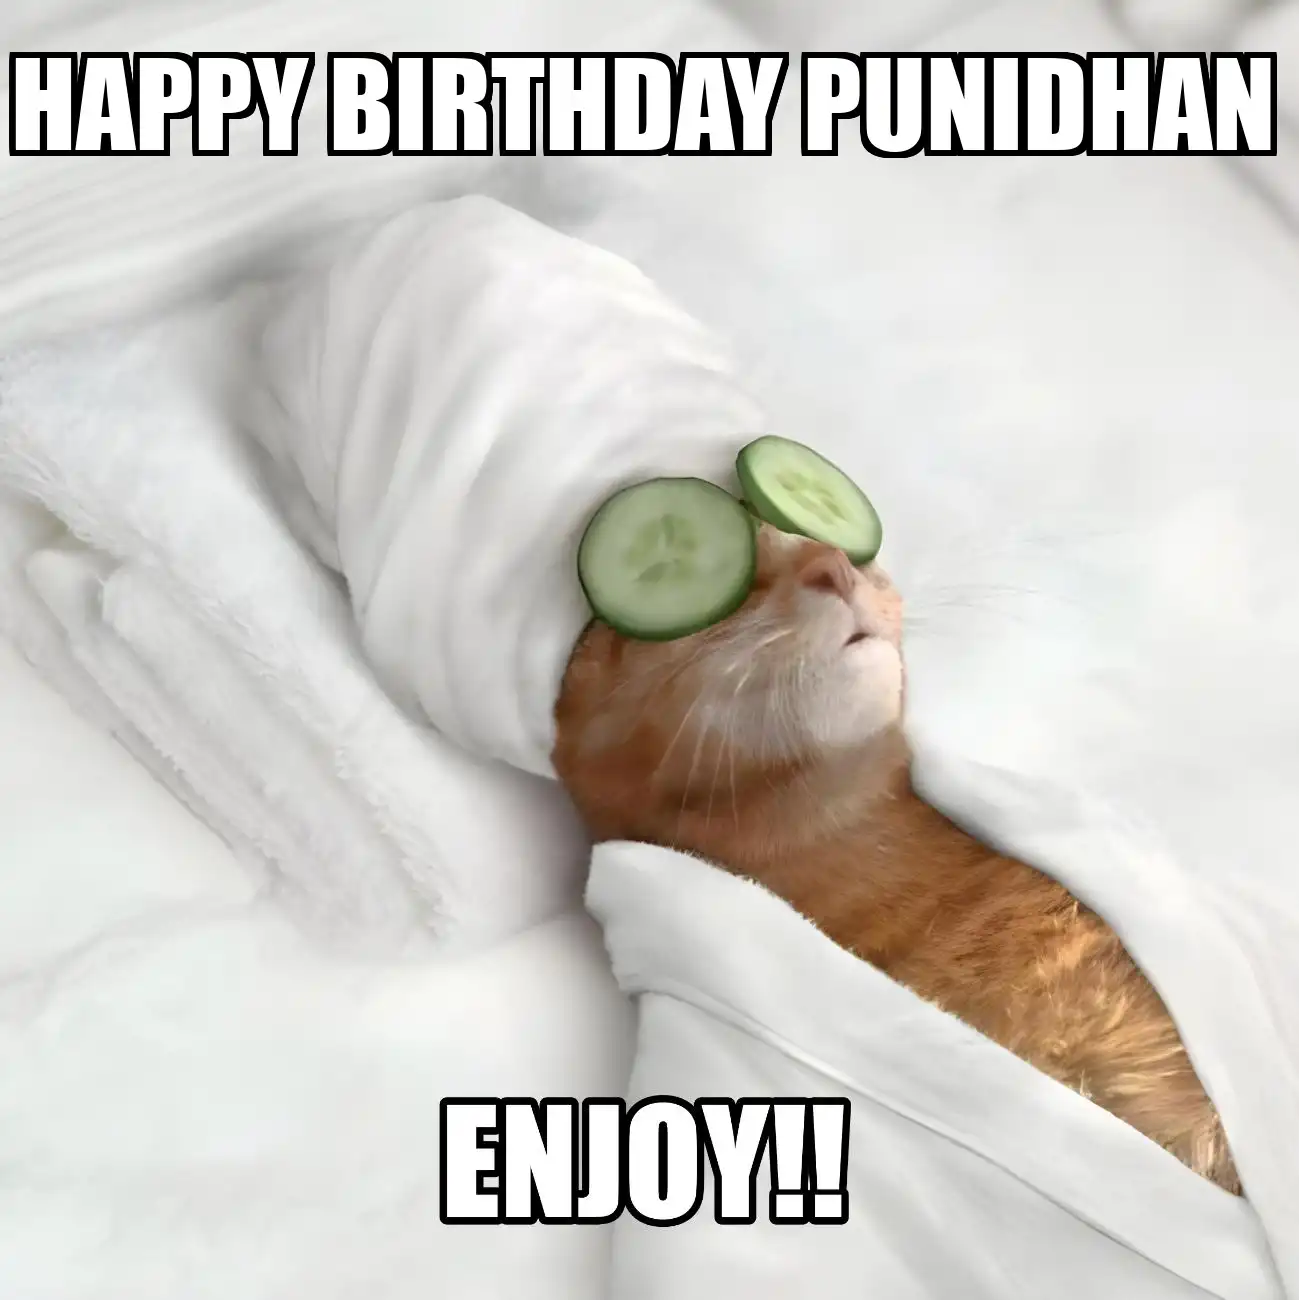 Happy Birthday Punidhan Enjoy Cat Meme